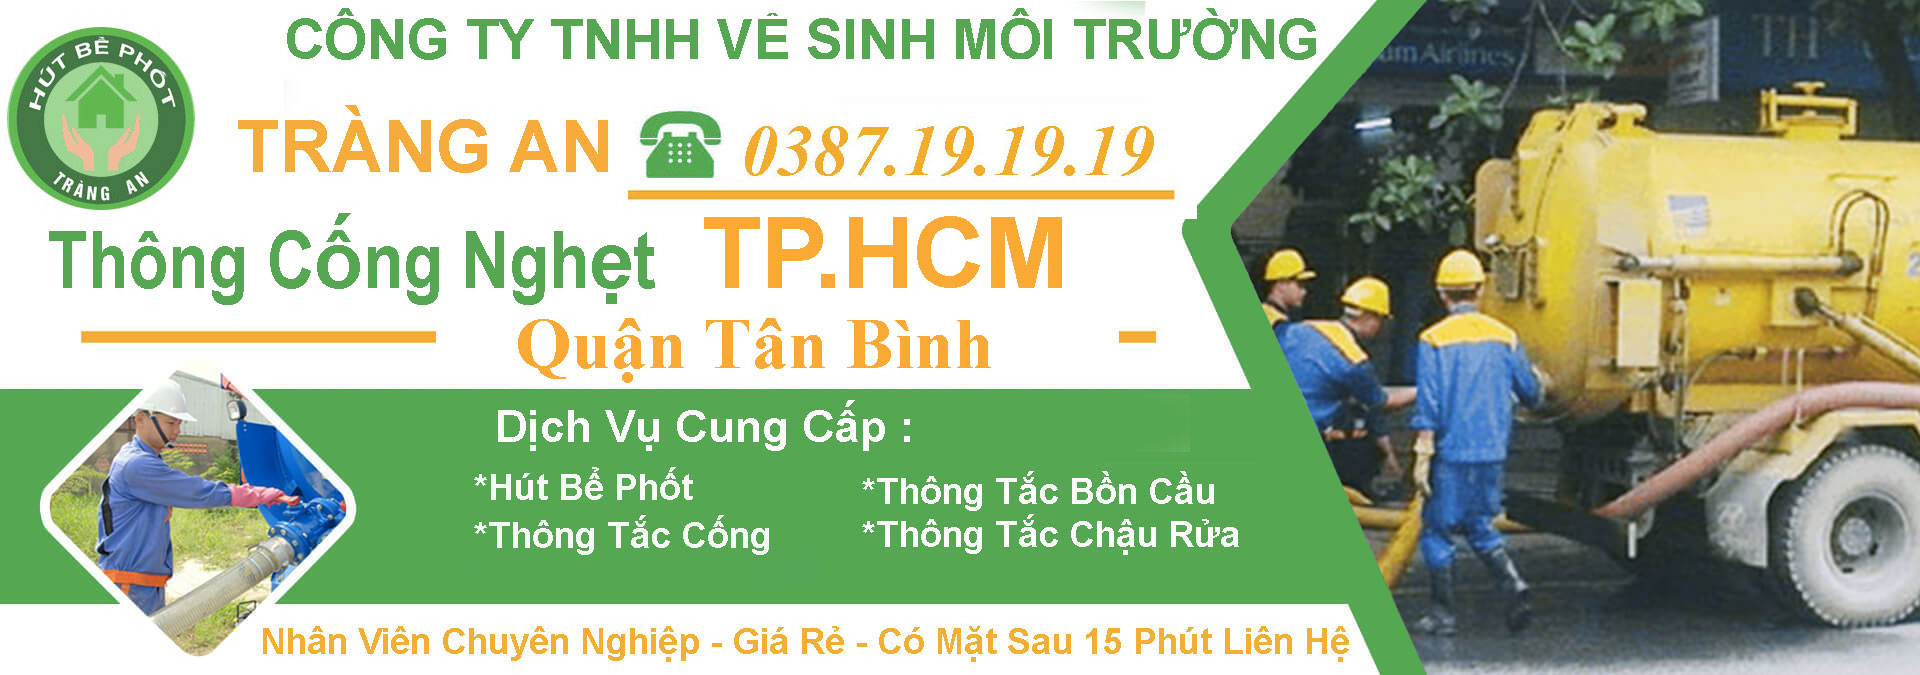 Thong Cong Nghet Tphcm Quan Tan Binh